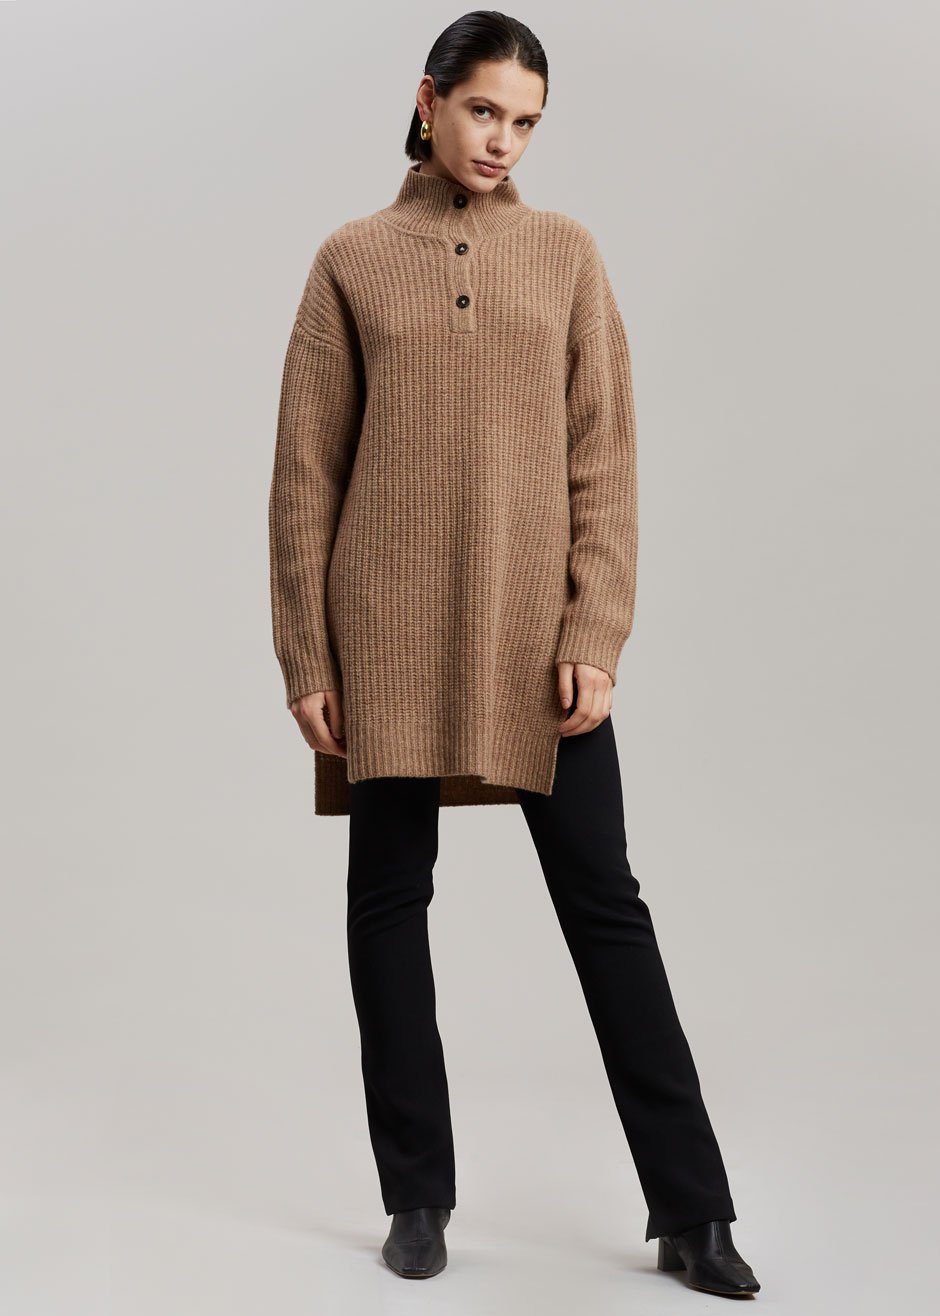 The Garment Canada Sweater Dress - Light Brown - 3